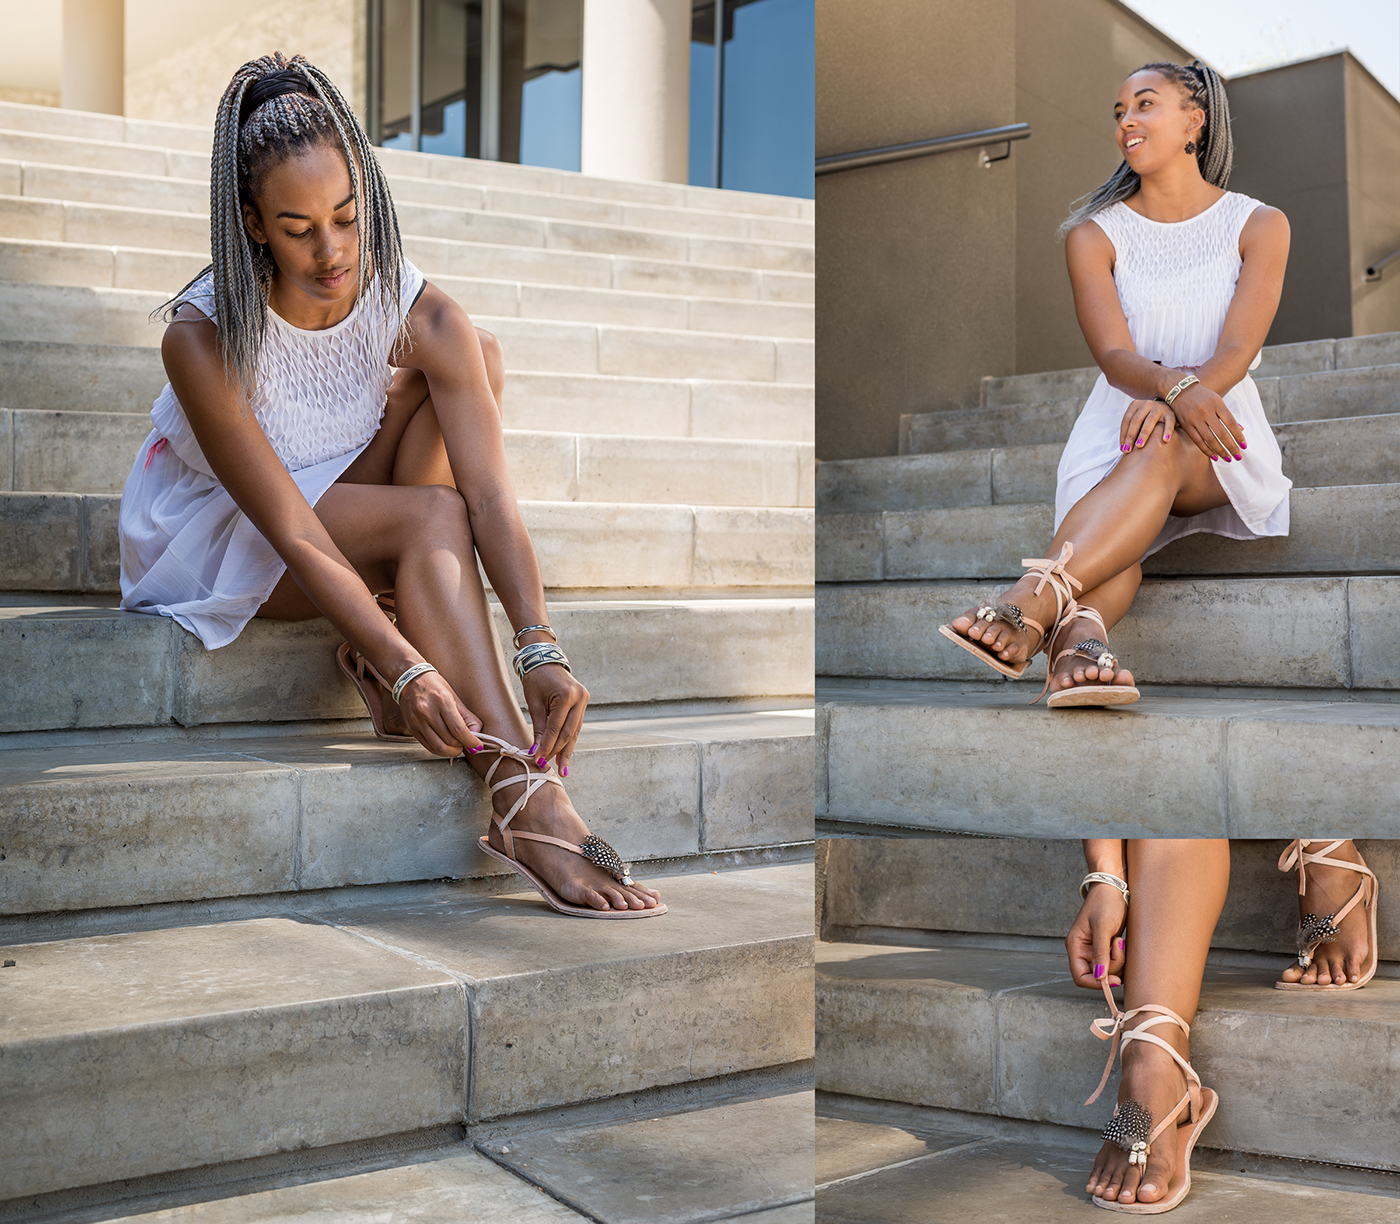 Namibia Namibian models Sandals vivibarefoot shoes lifestyle male female african city products showcase Kickstarter